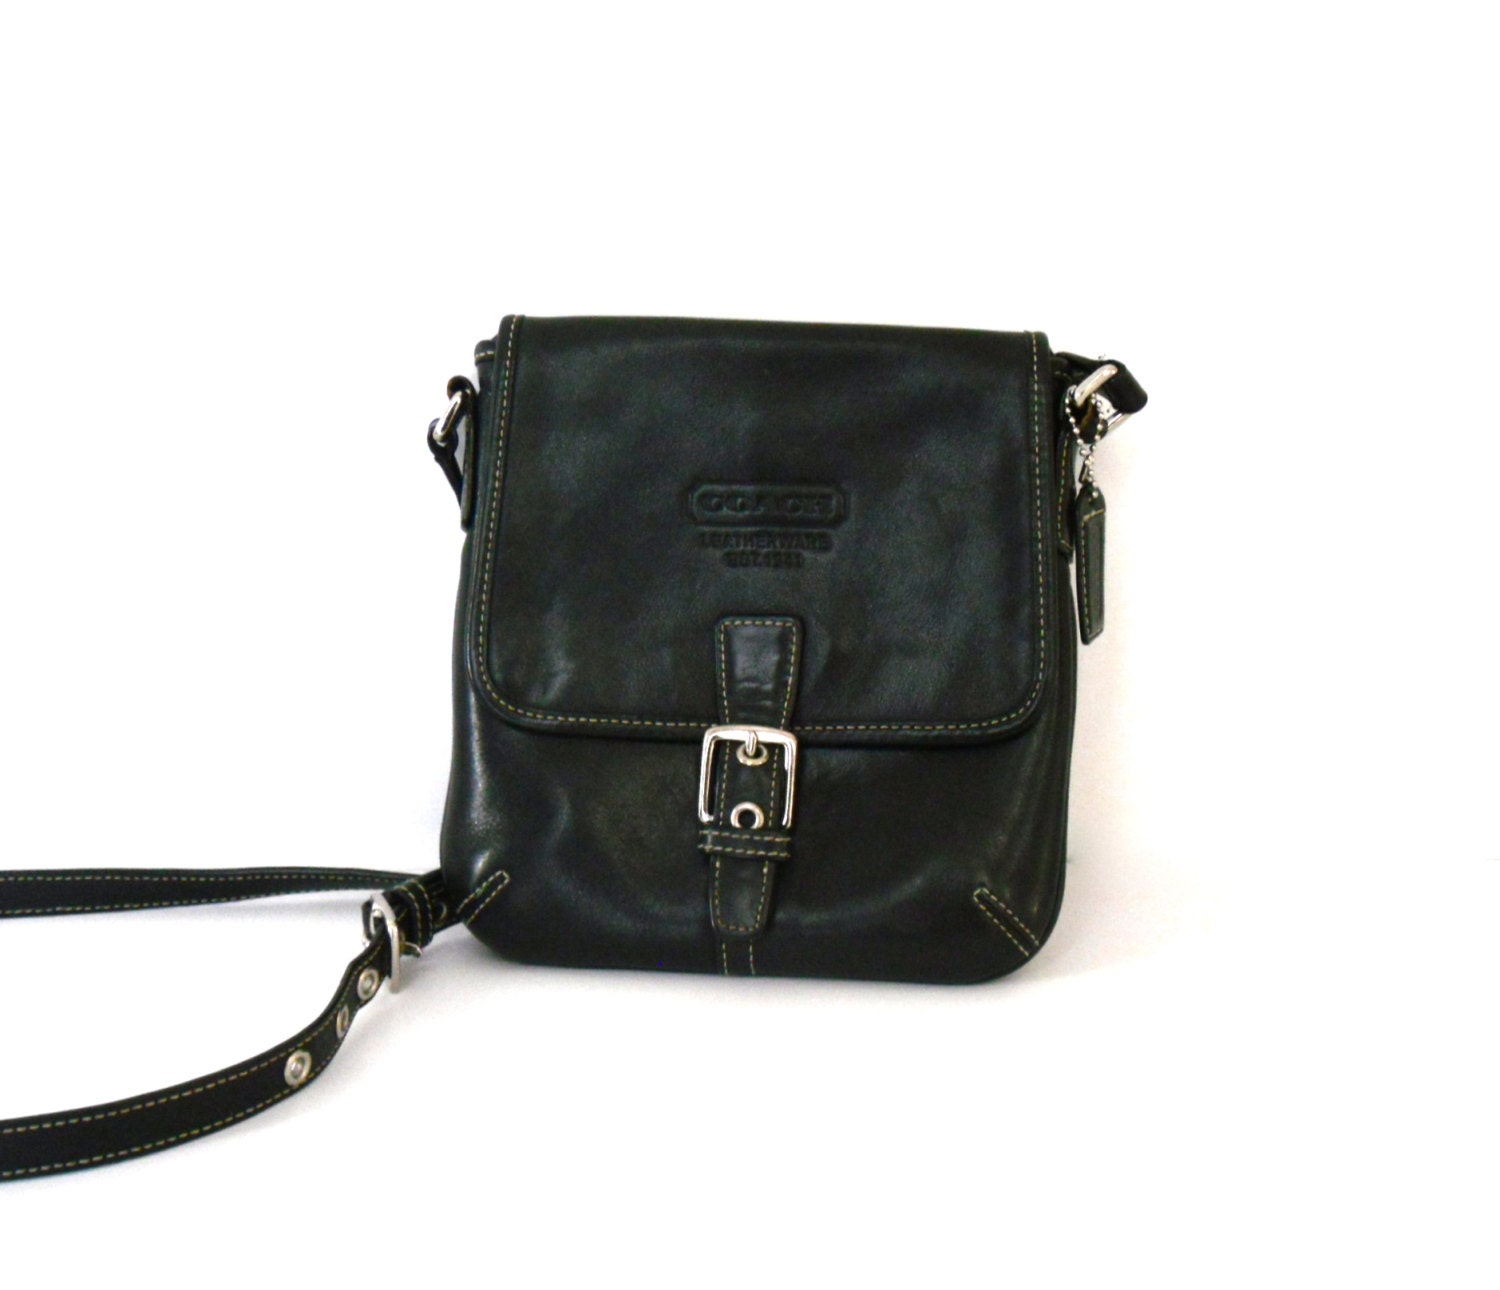 Vintage Coach Black Leather Crossbody Messenger Bag Purse with